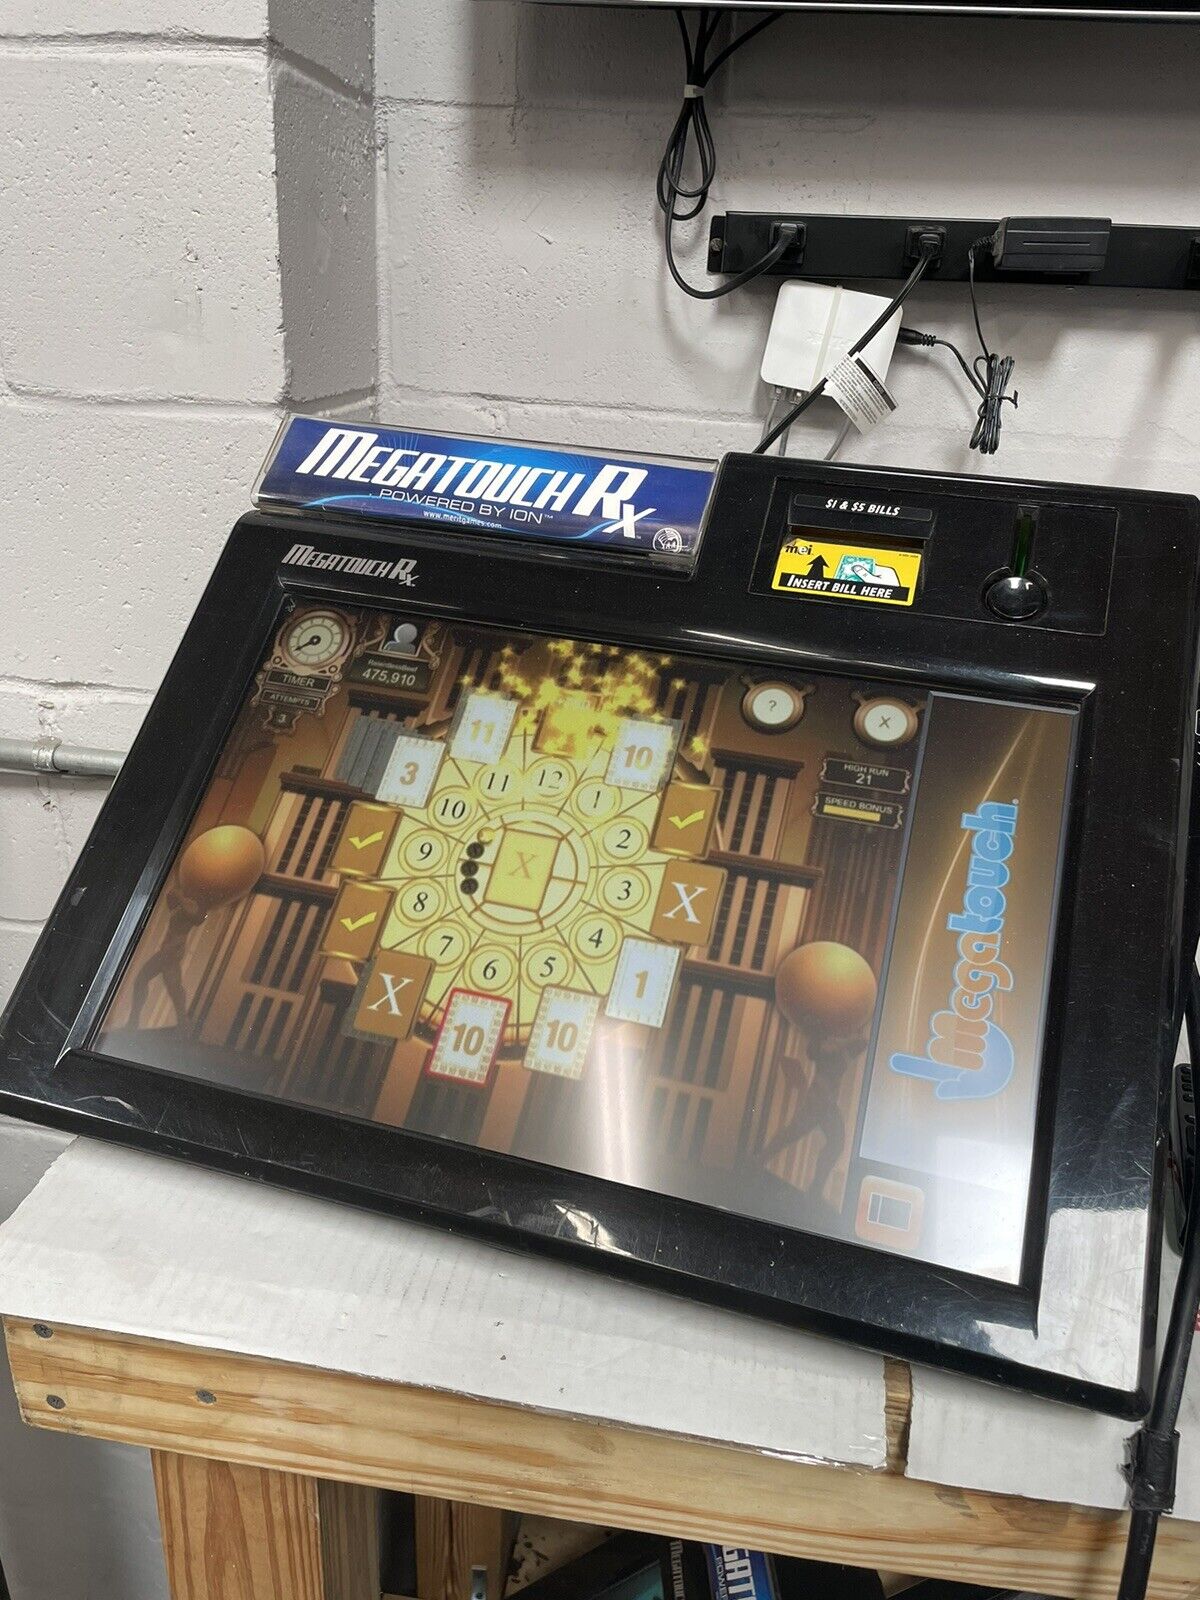 MegatouchRX Mega Touch RX Complete Working Unit Bar Top Arcade Touchscreen